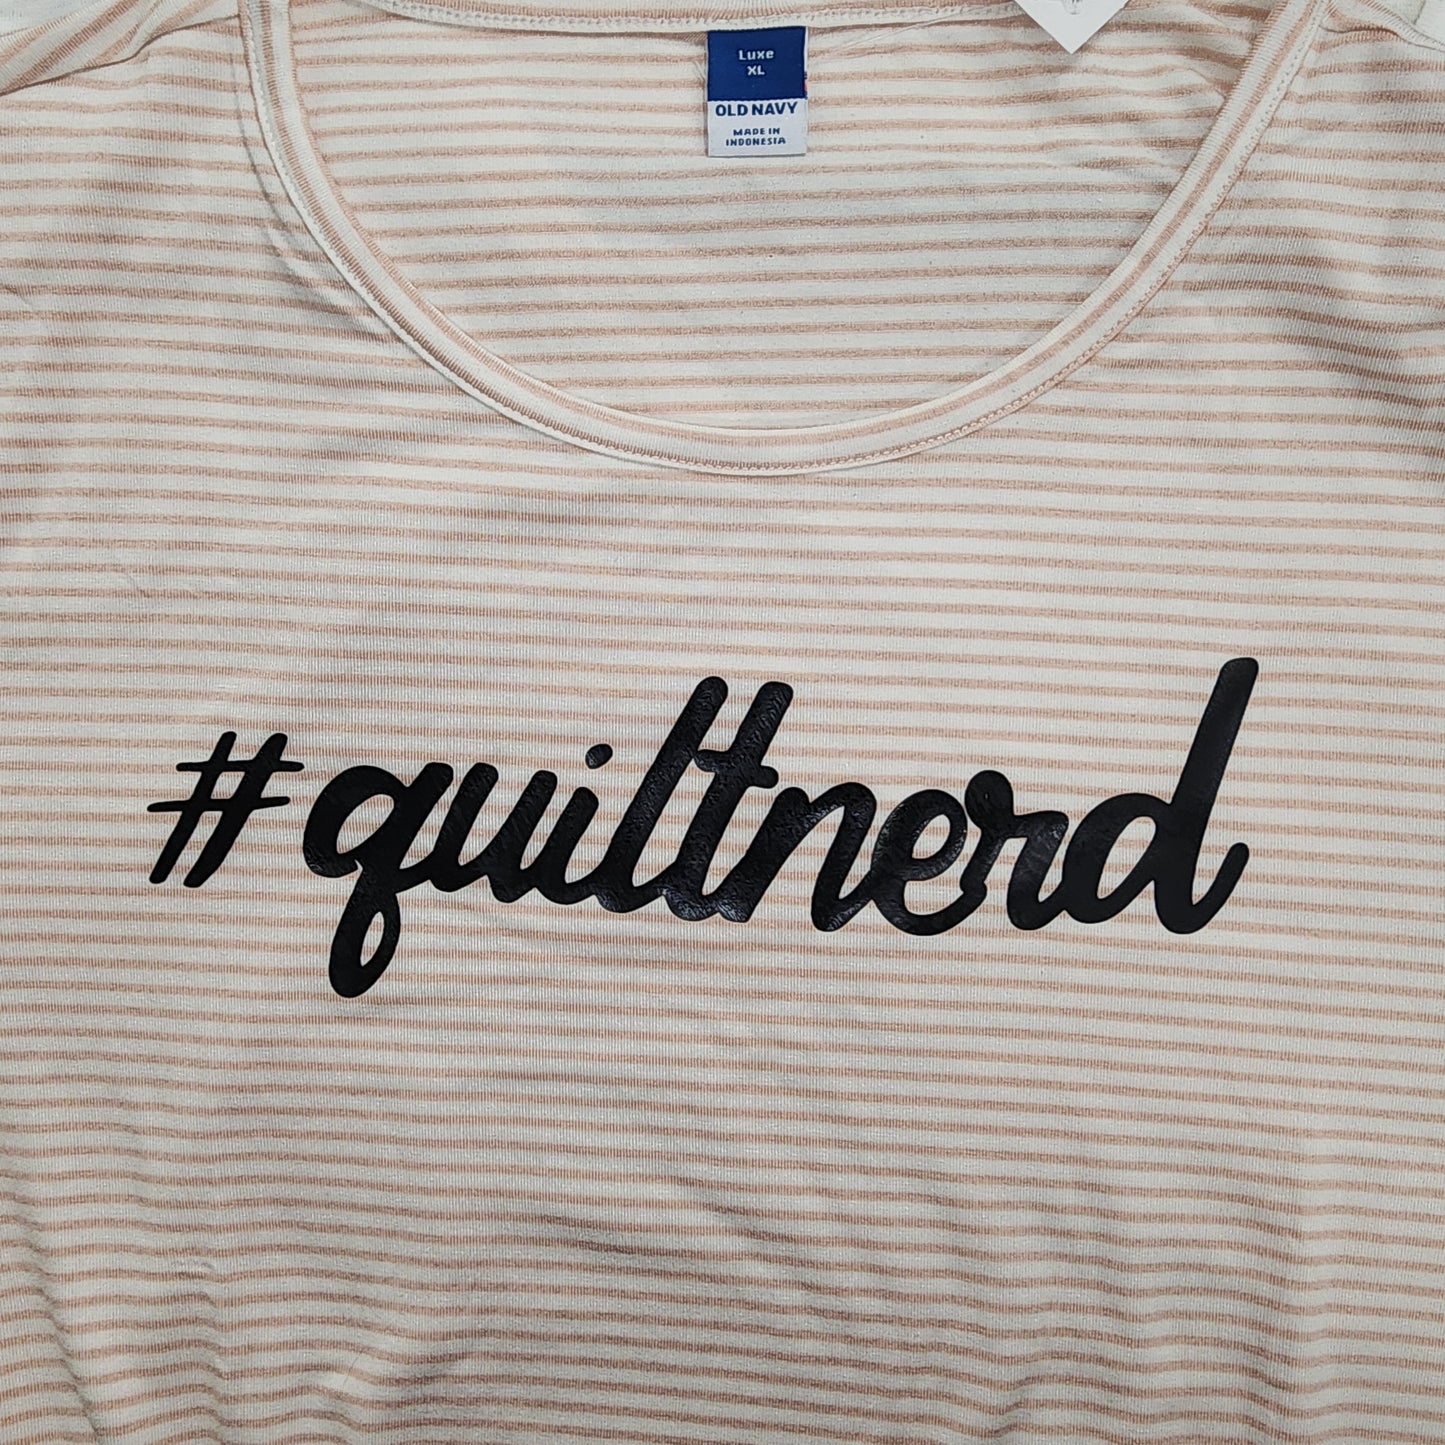 Tshirt, peach striped, #quiltnerd in black letters, crew neck, xl